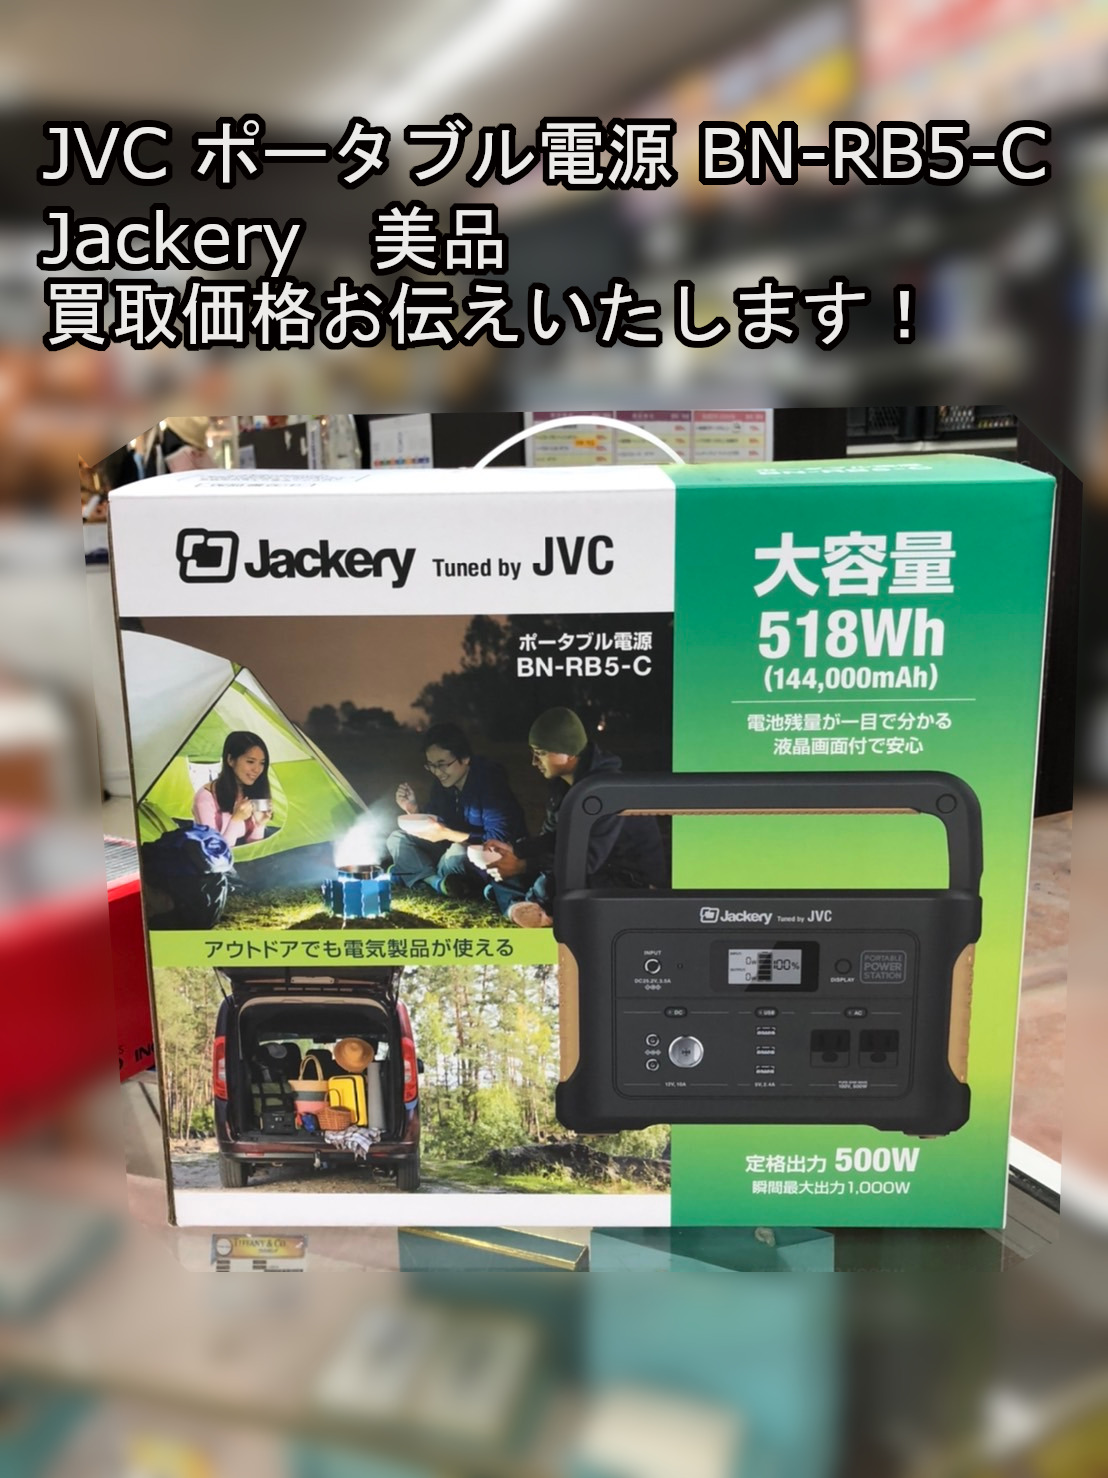 ▽7/15 JVC ポータブル電源 BN-RB5-C Jackery お買取り価格お伝え